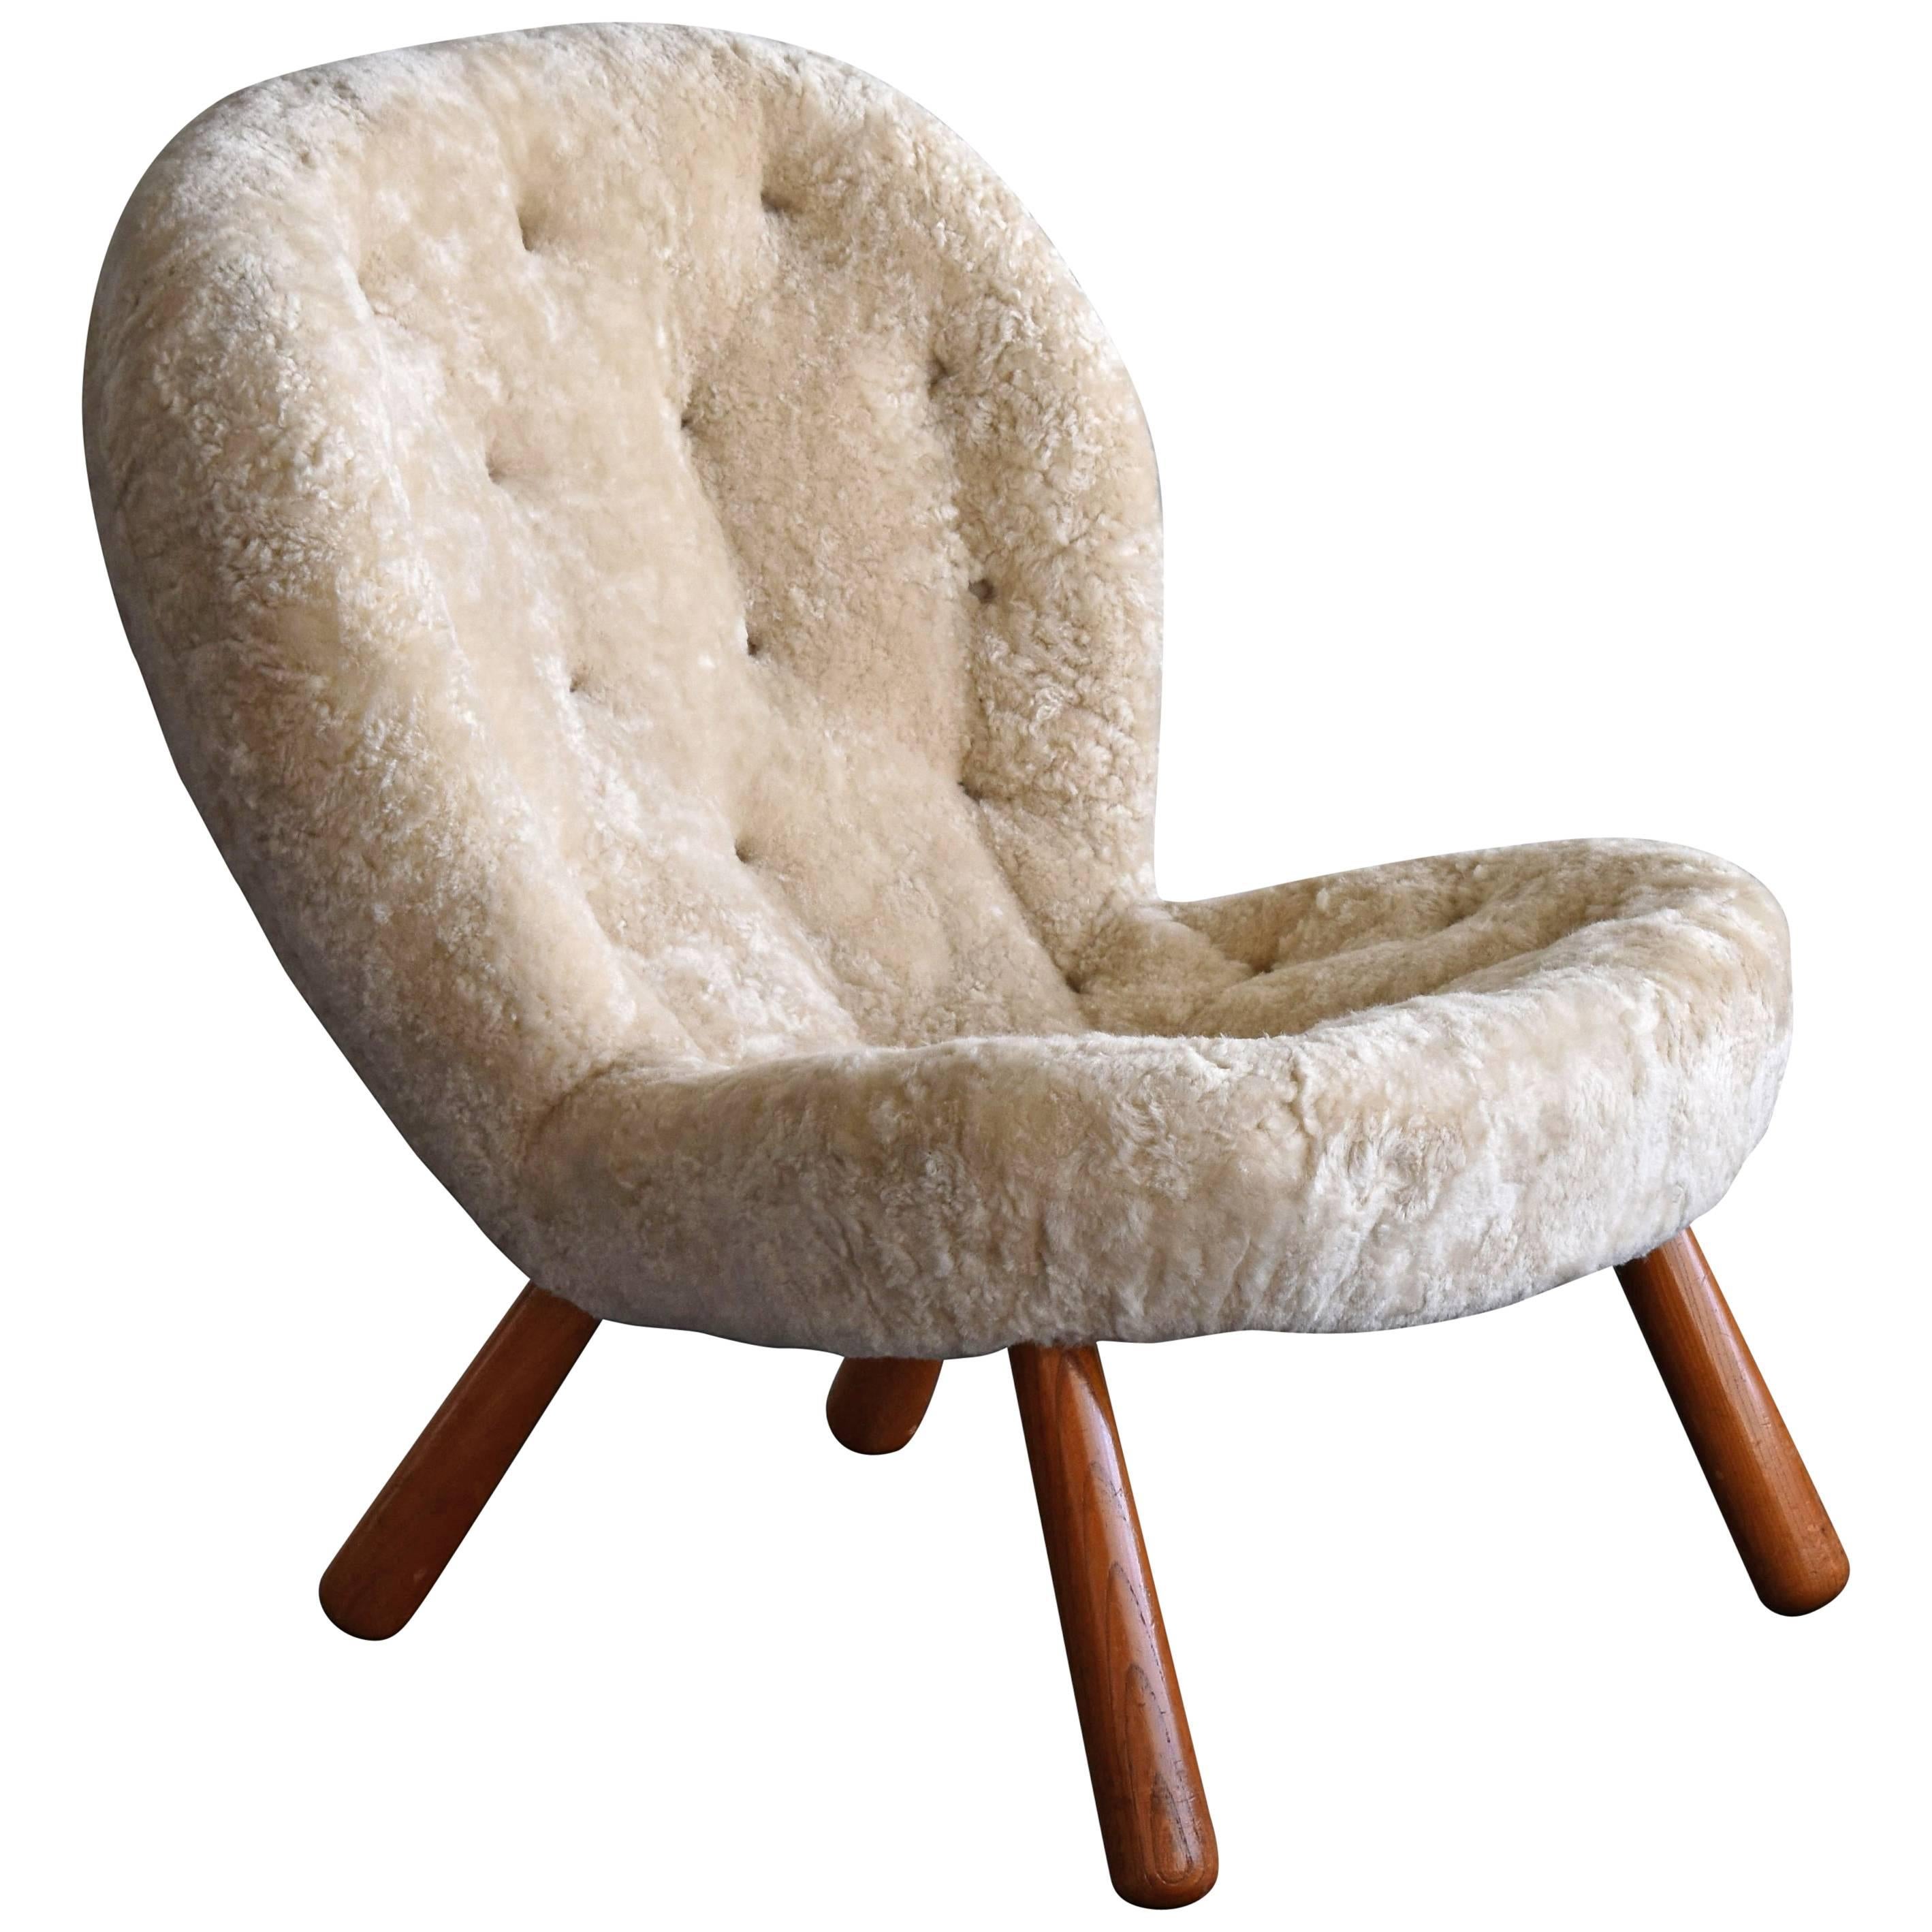 Philip Arctander 'Clam' Lounge Chair, Beige Sheepskin and Beech, 1944